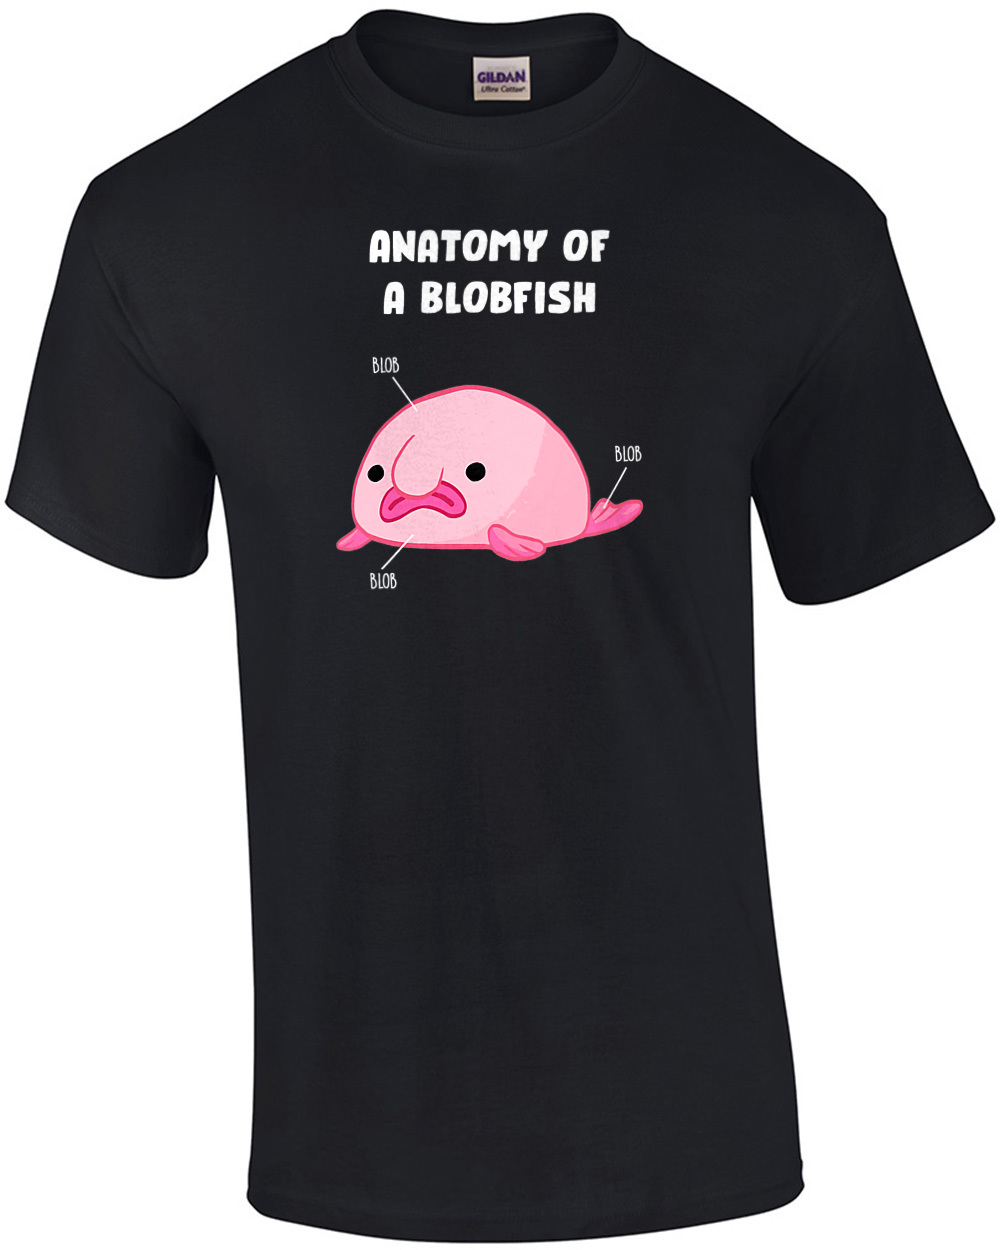 Blobfish Is My Spirit Animal Funny Blobfish Meme' Kids' Sport T